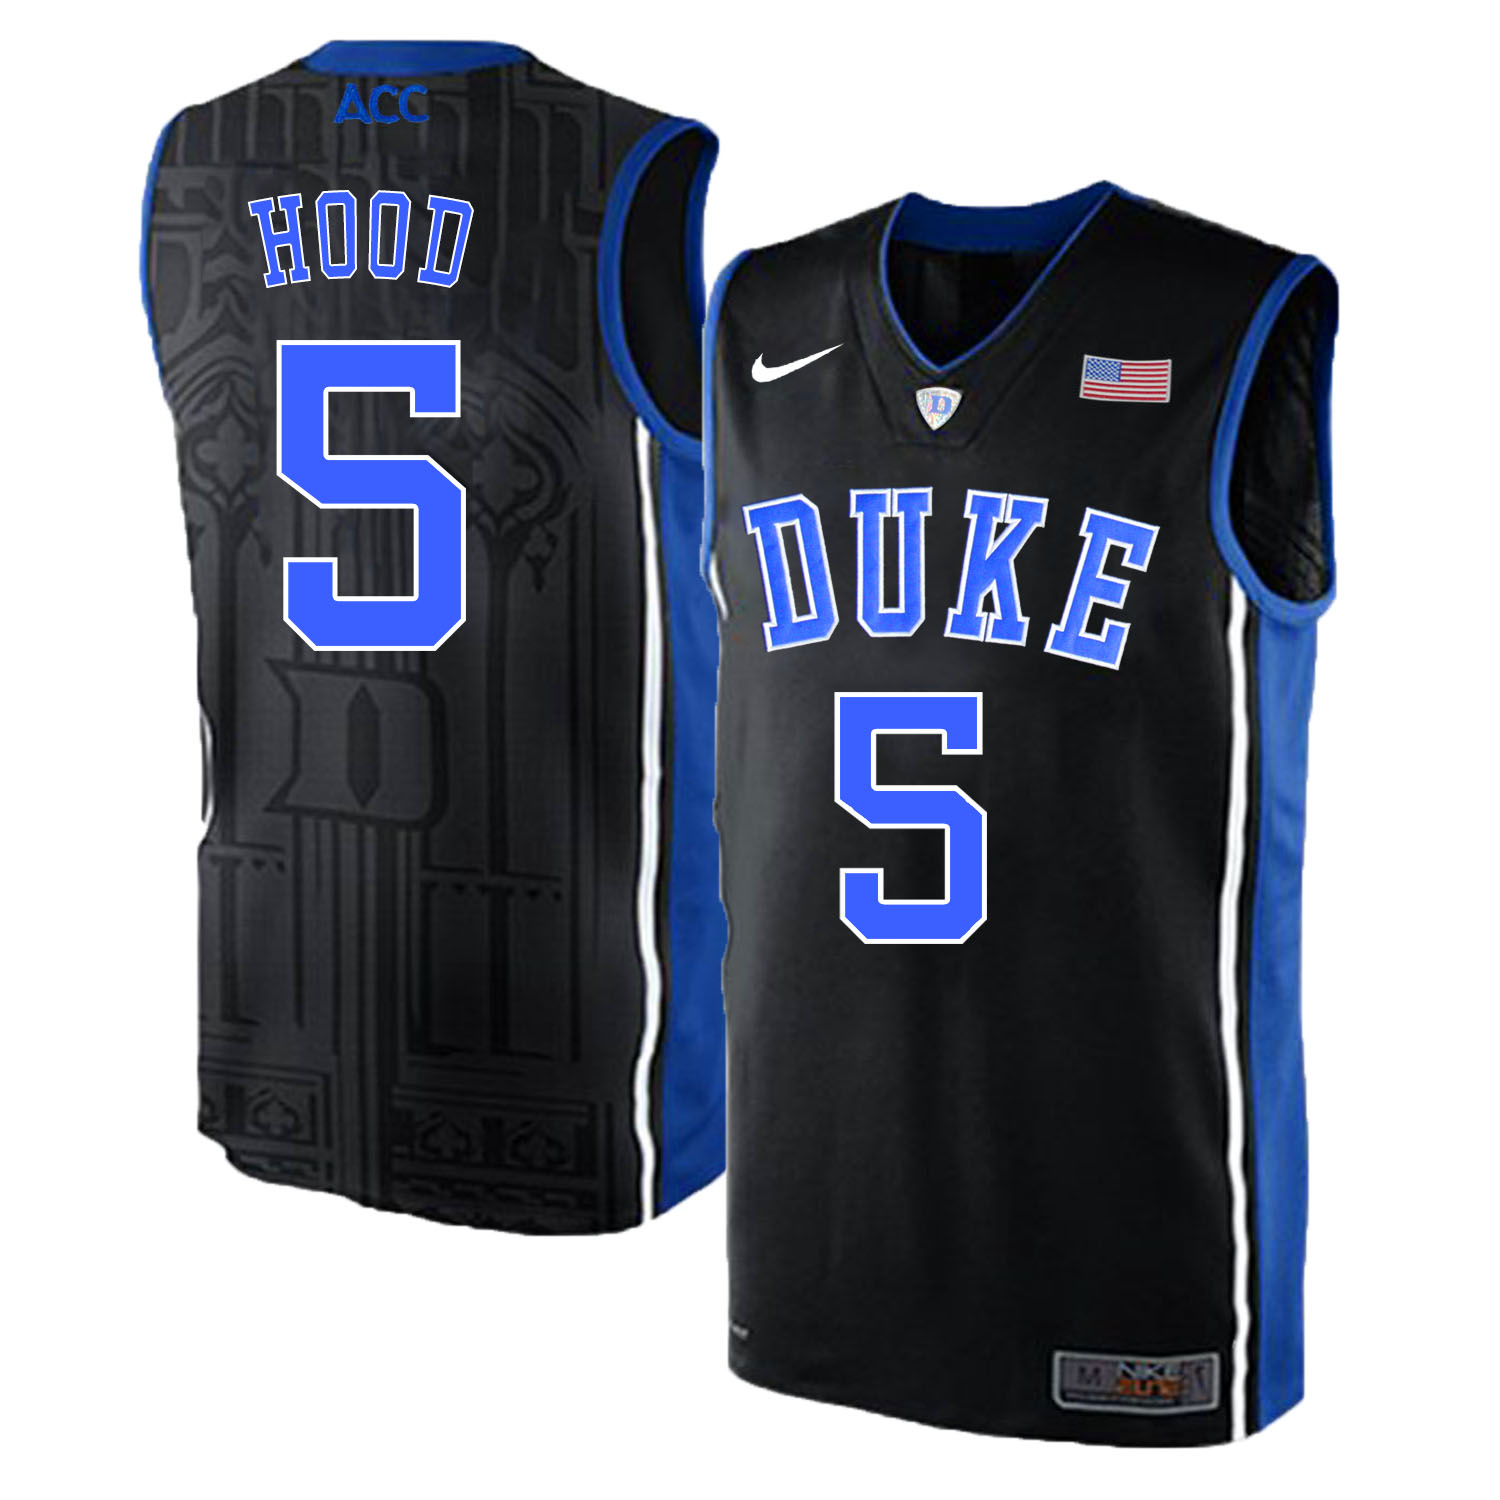 Duke Blue Devils 5 Rodney Hood Black Elite Nike College Basketball Jersey